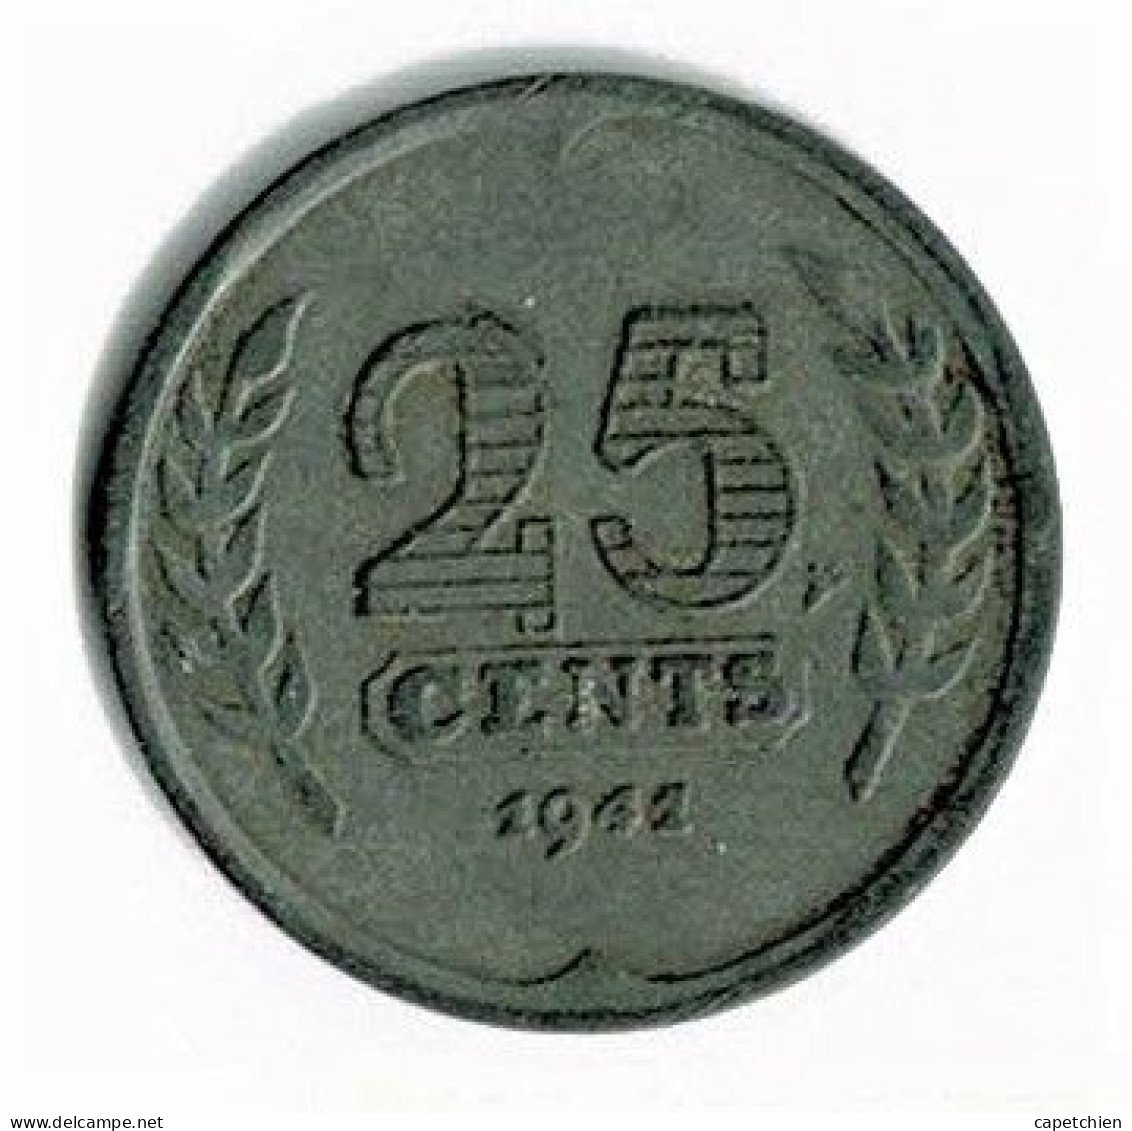 PAYS-BAS / 25 CENTS /1944 / ZINC - 5 Centavos